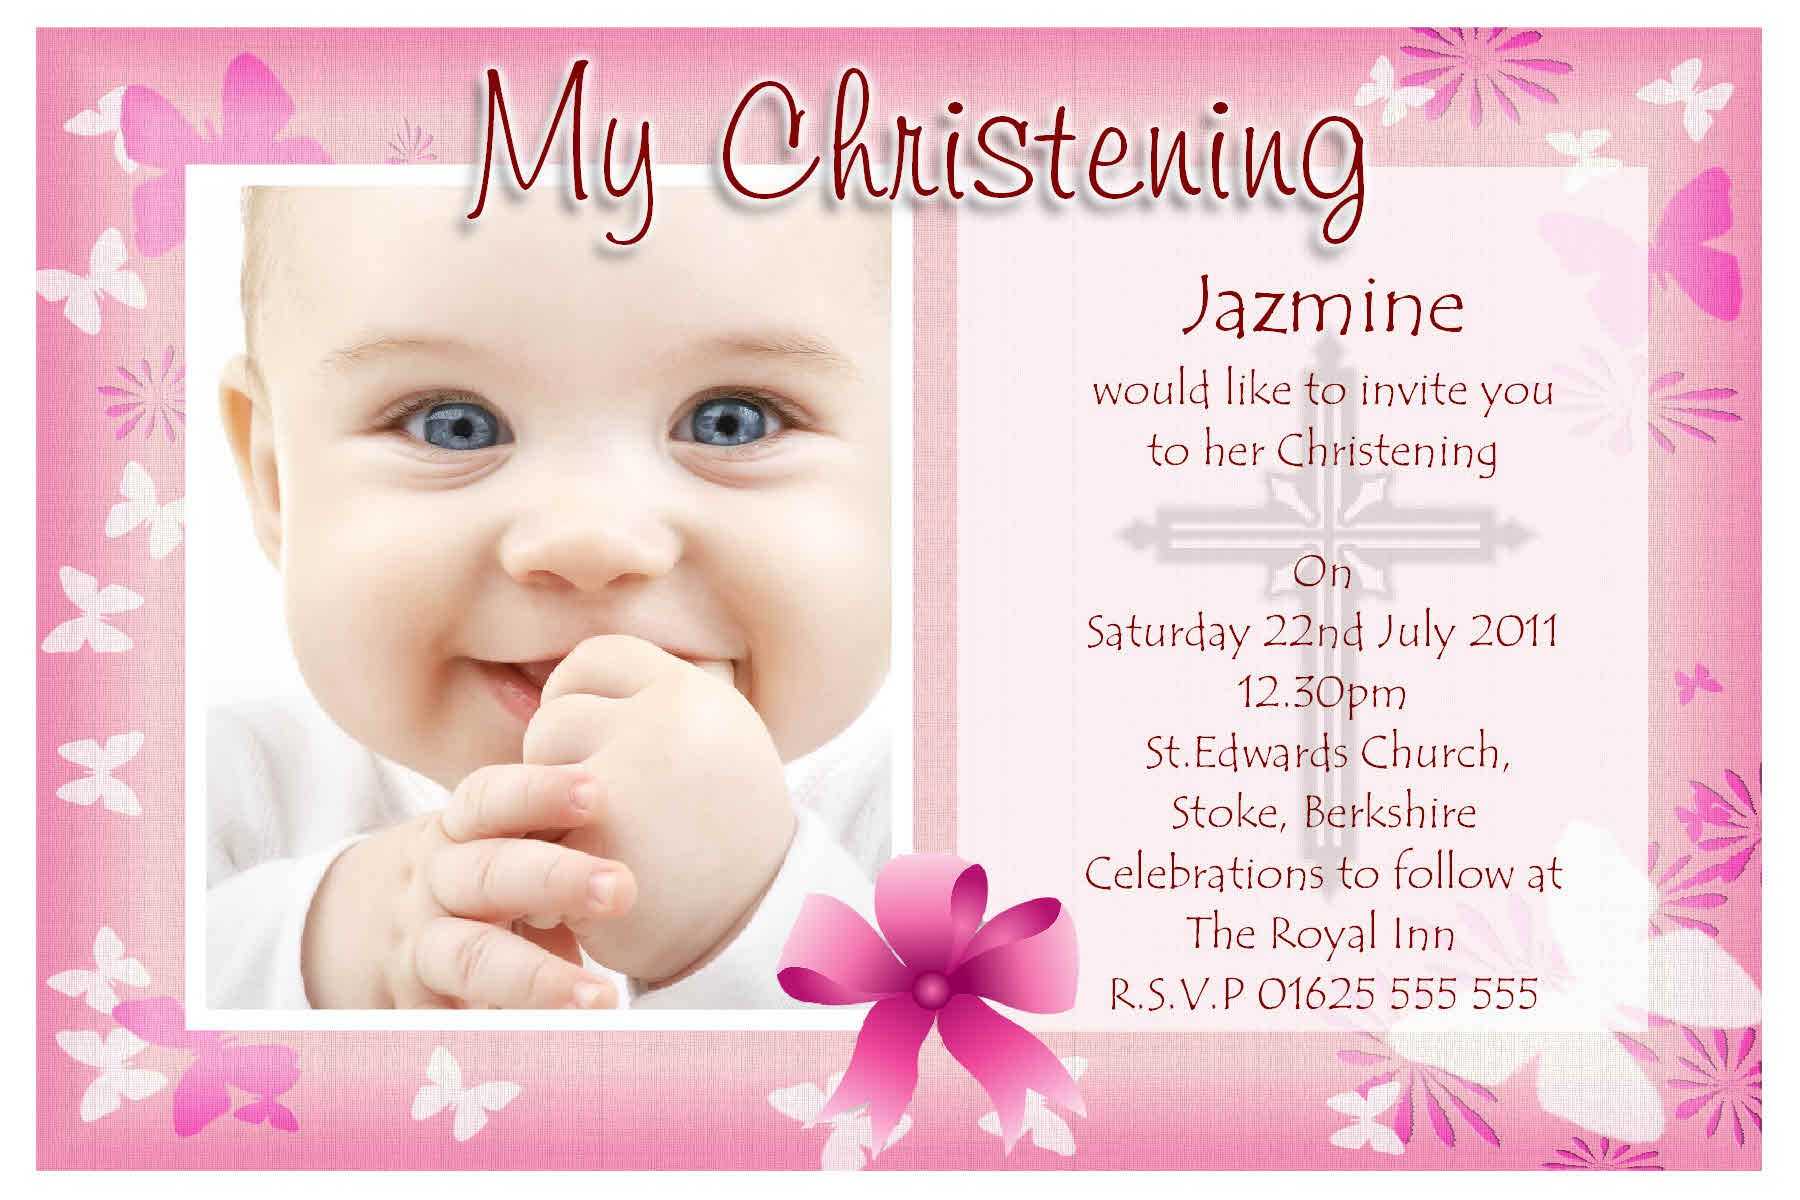 Invitation Cards For Christening Baptism | Invitationjpg Pertaining To Baptism Invitation Card Template